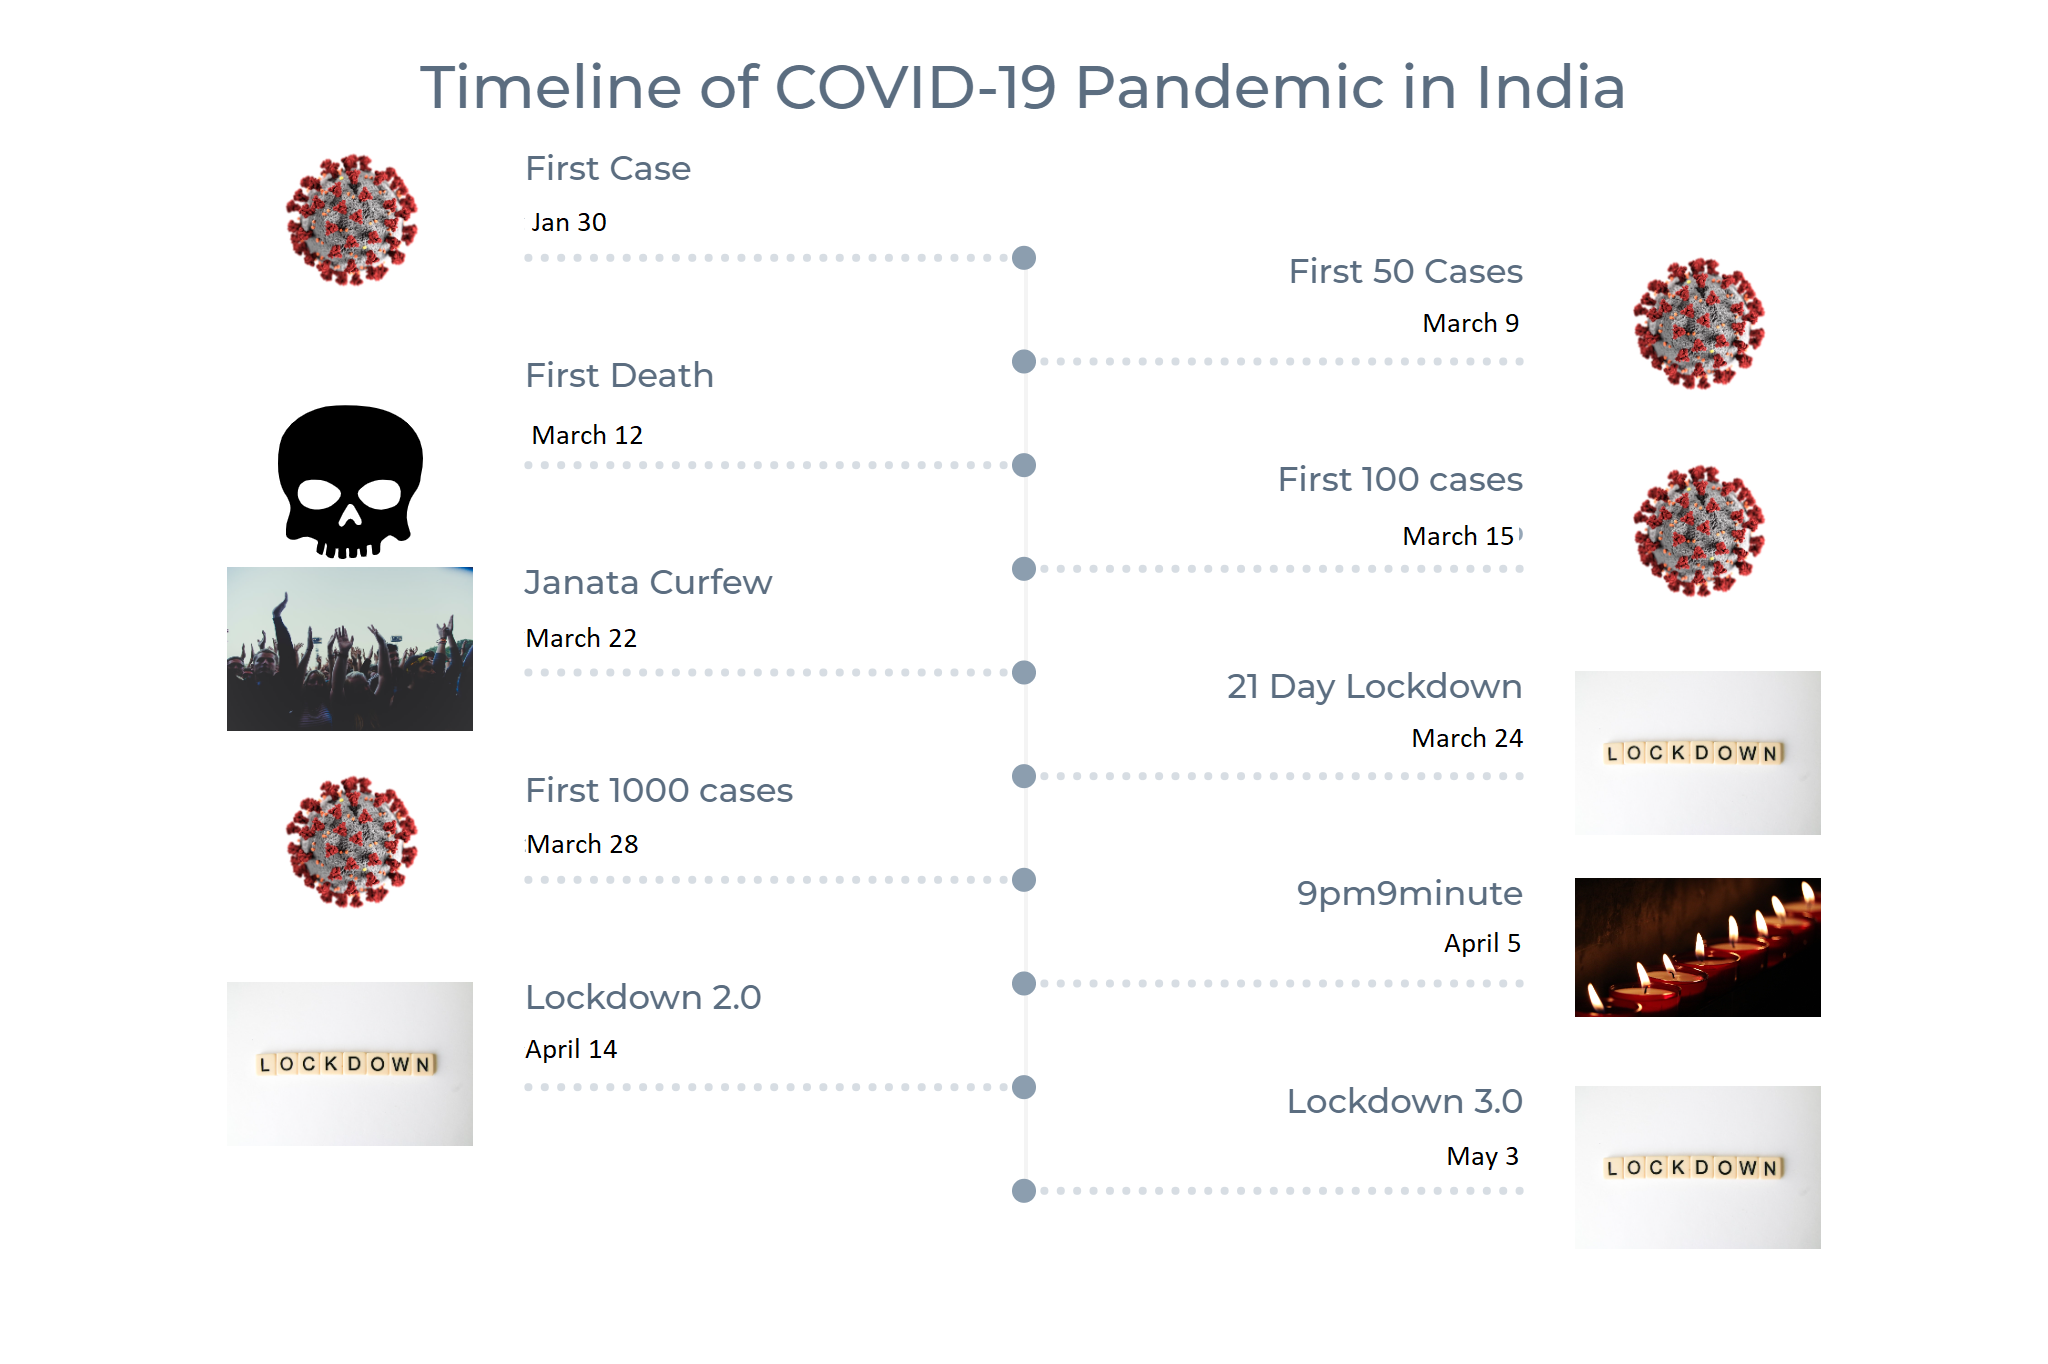 Covid-19 Timeline in India